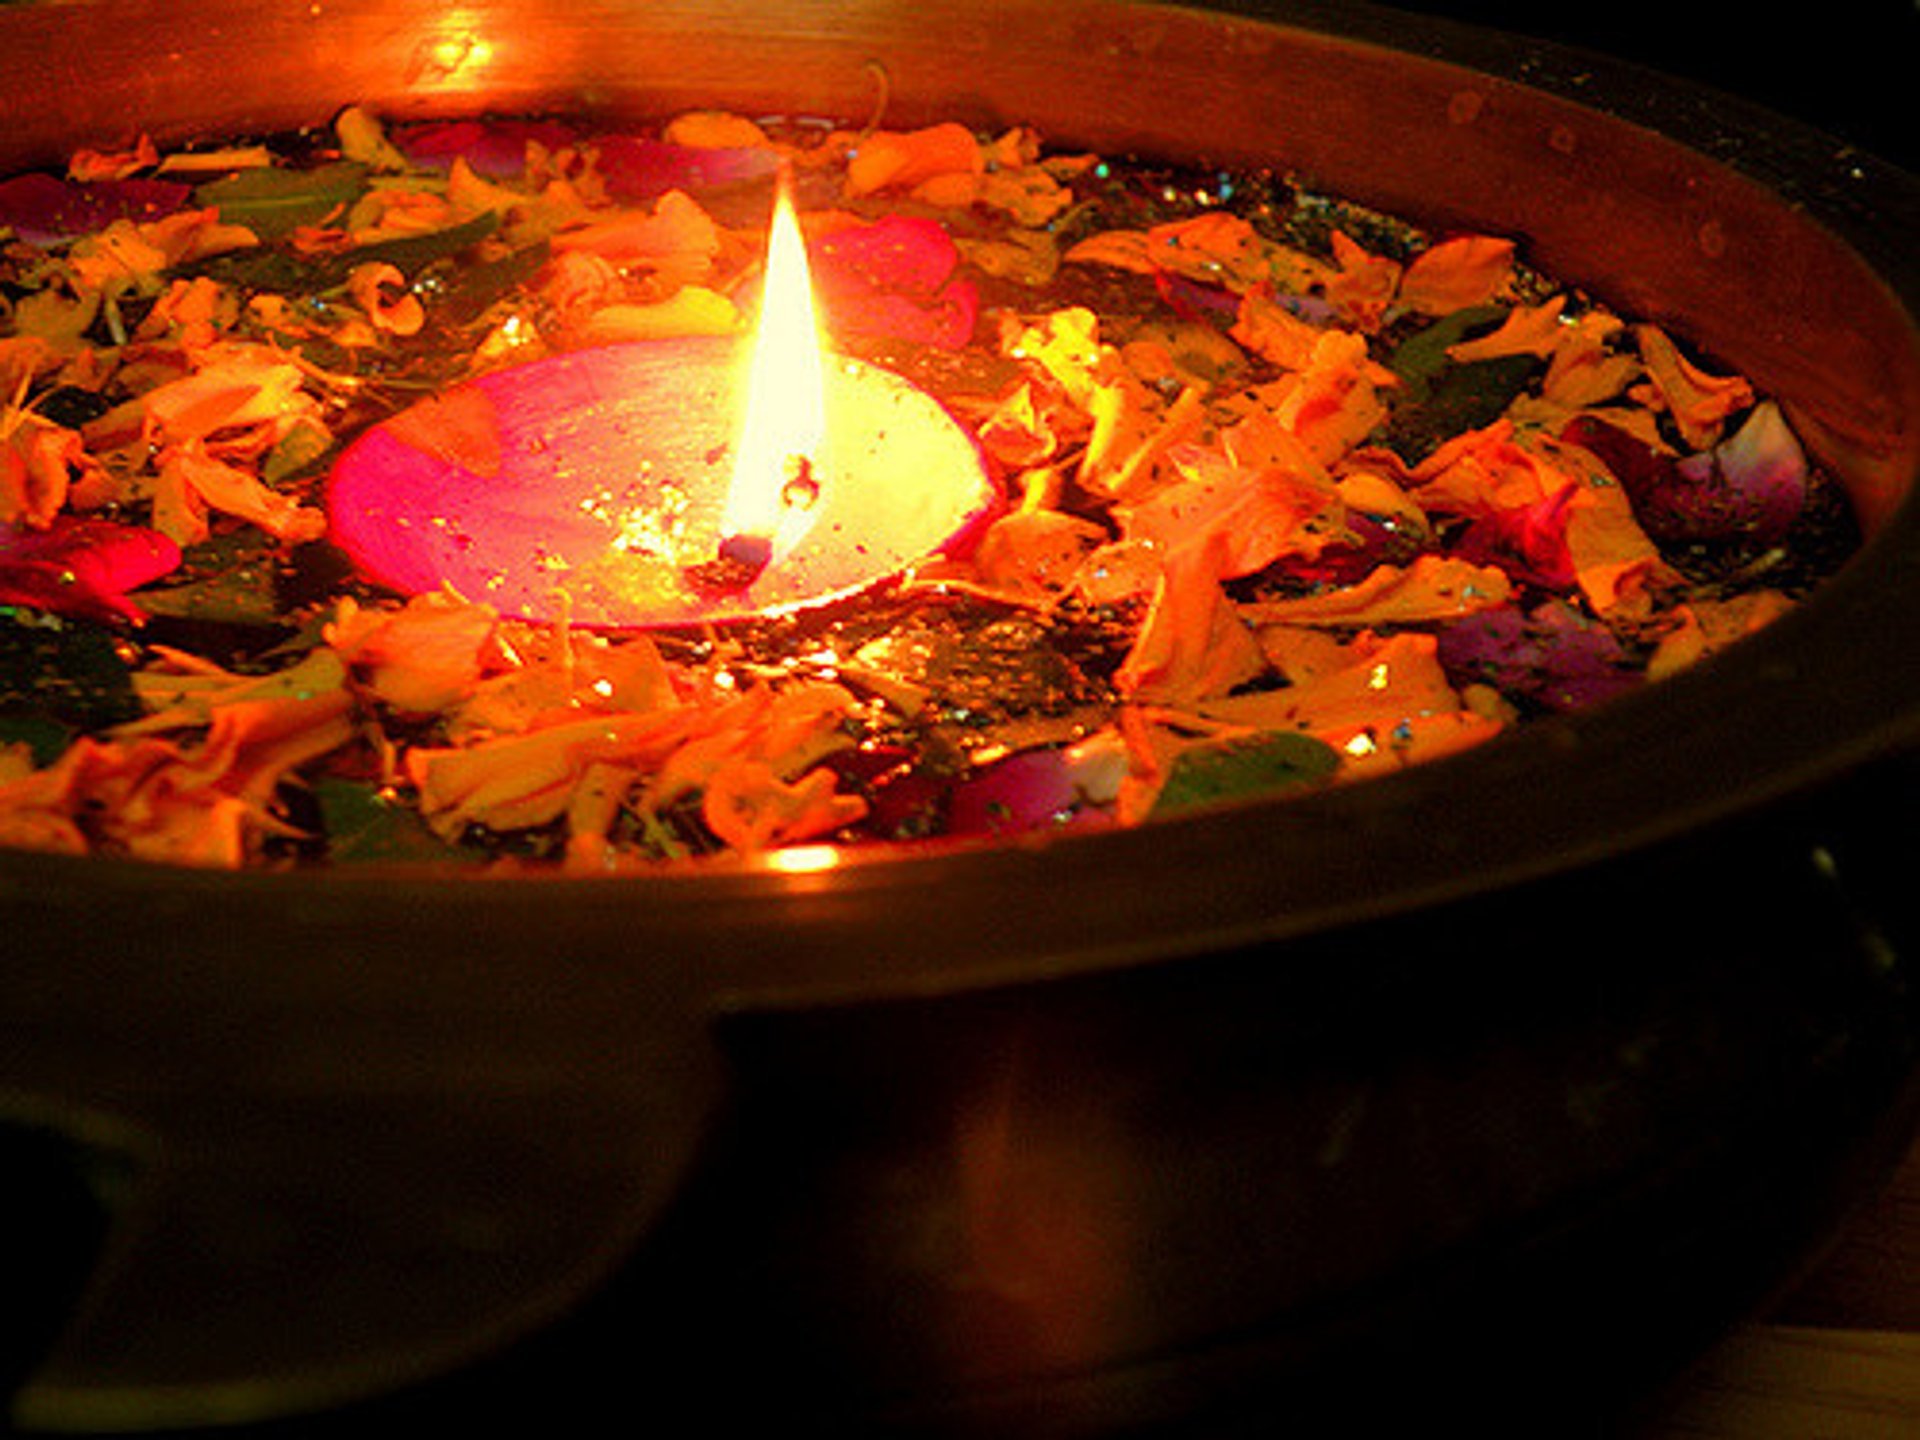 Diwali, Festival das Luzes